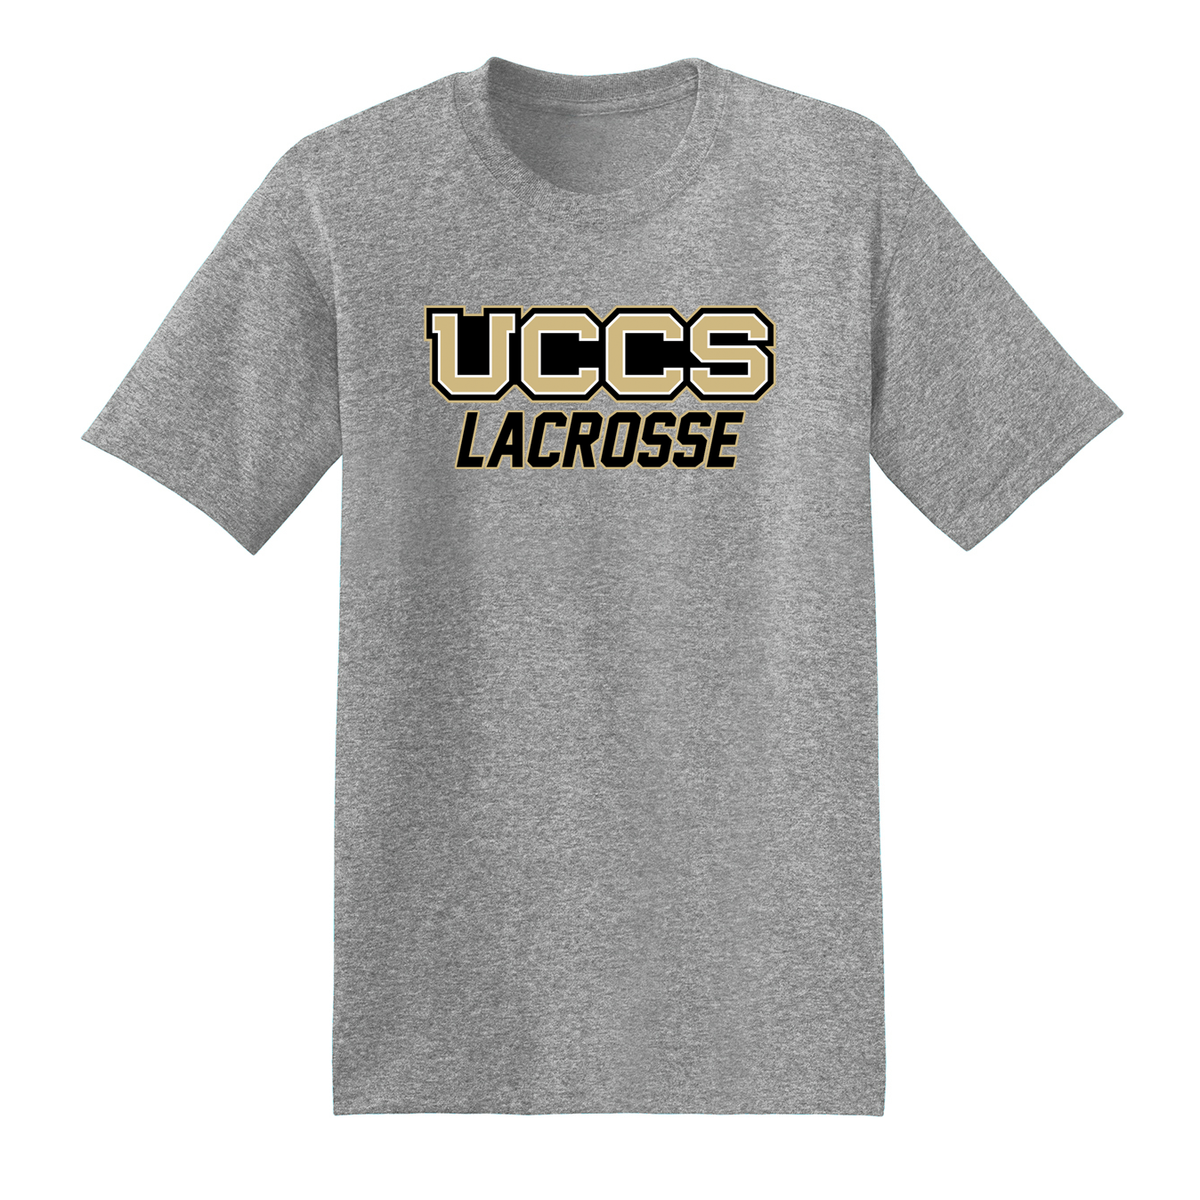 UCCS T-Shirt